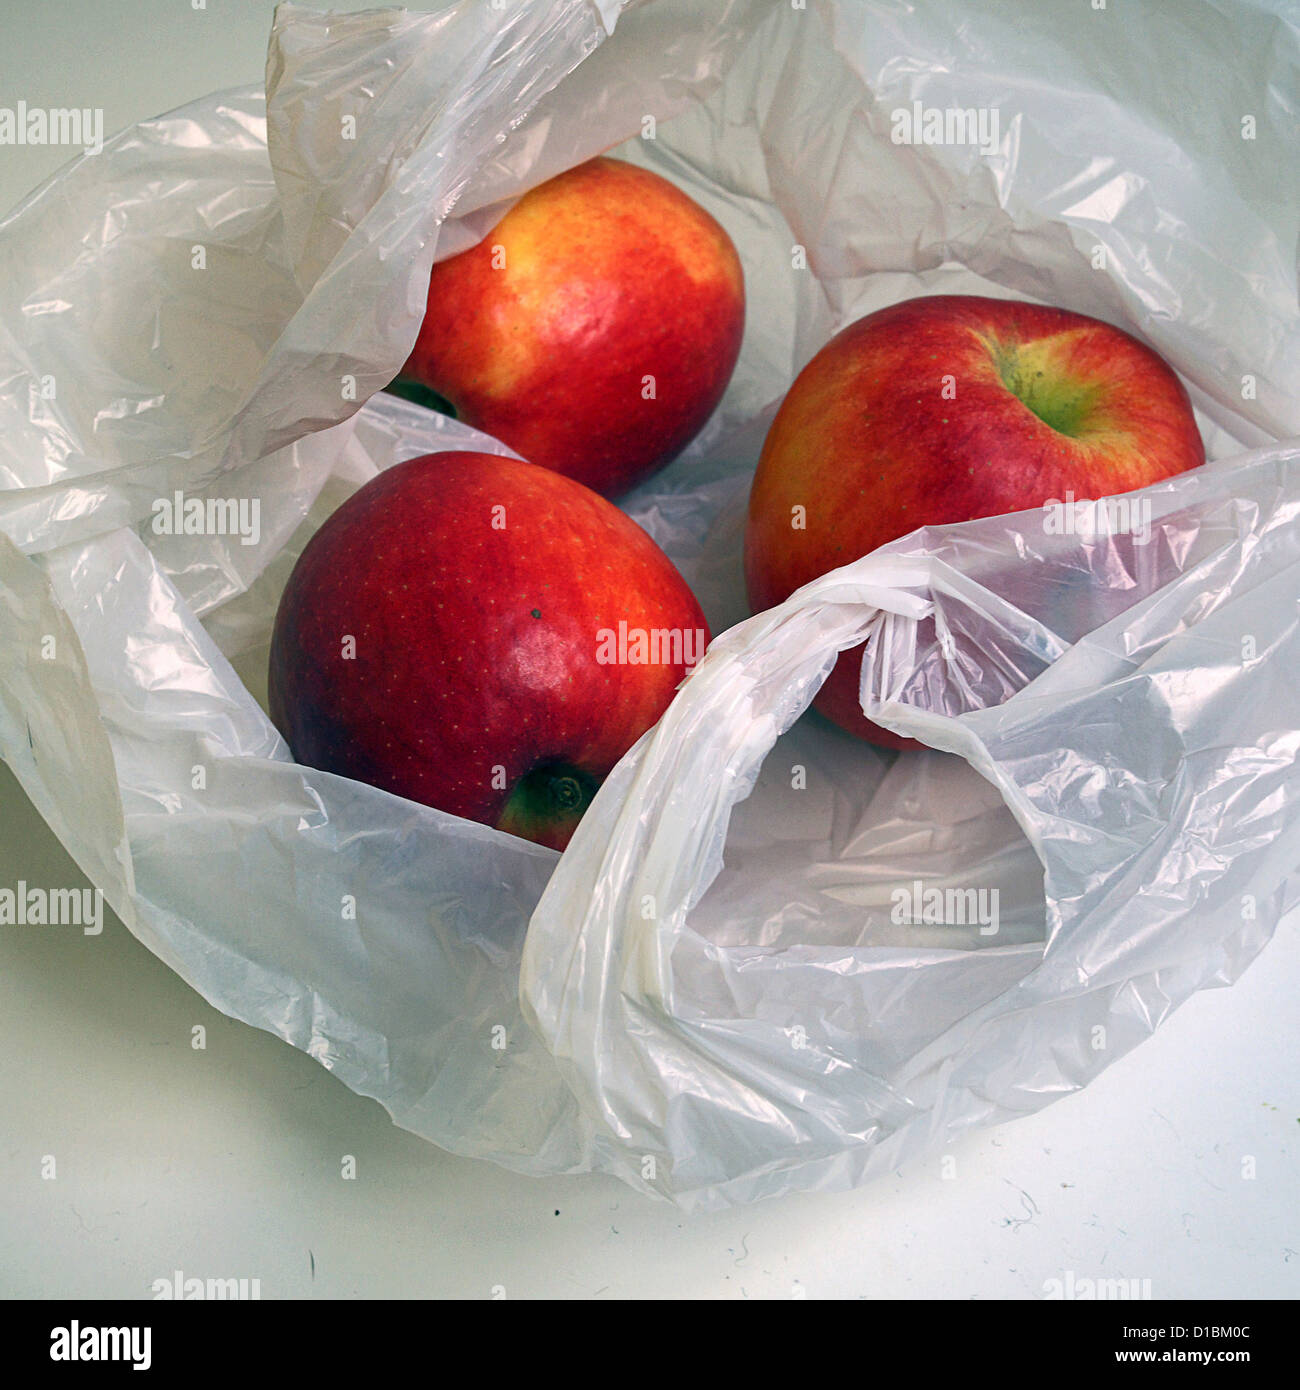 Gala Bag of Apples | Metro